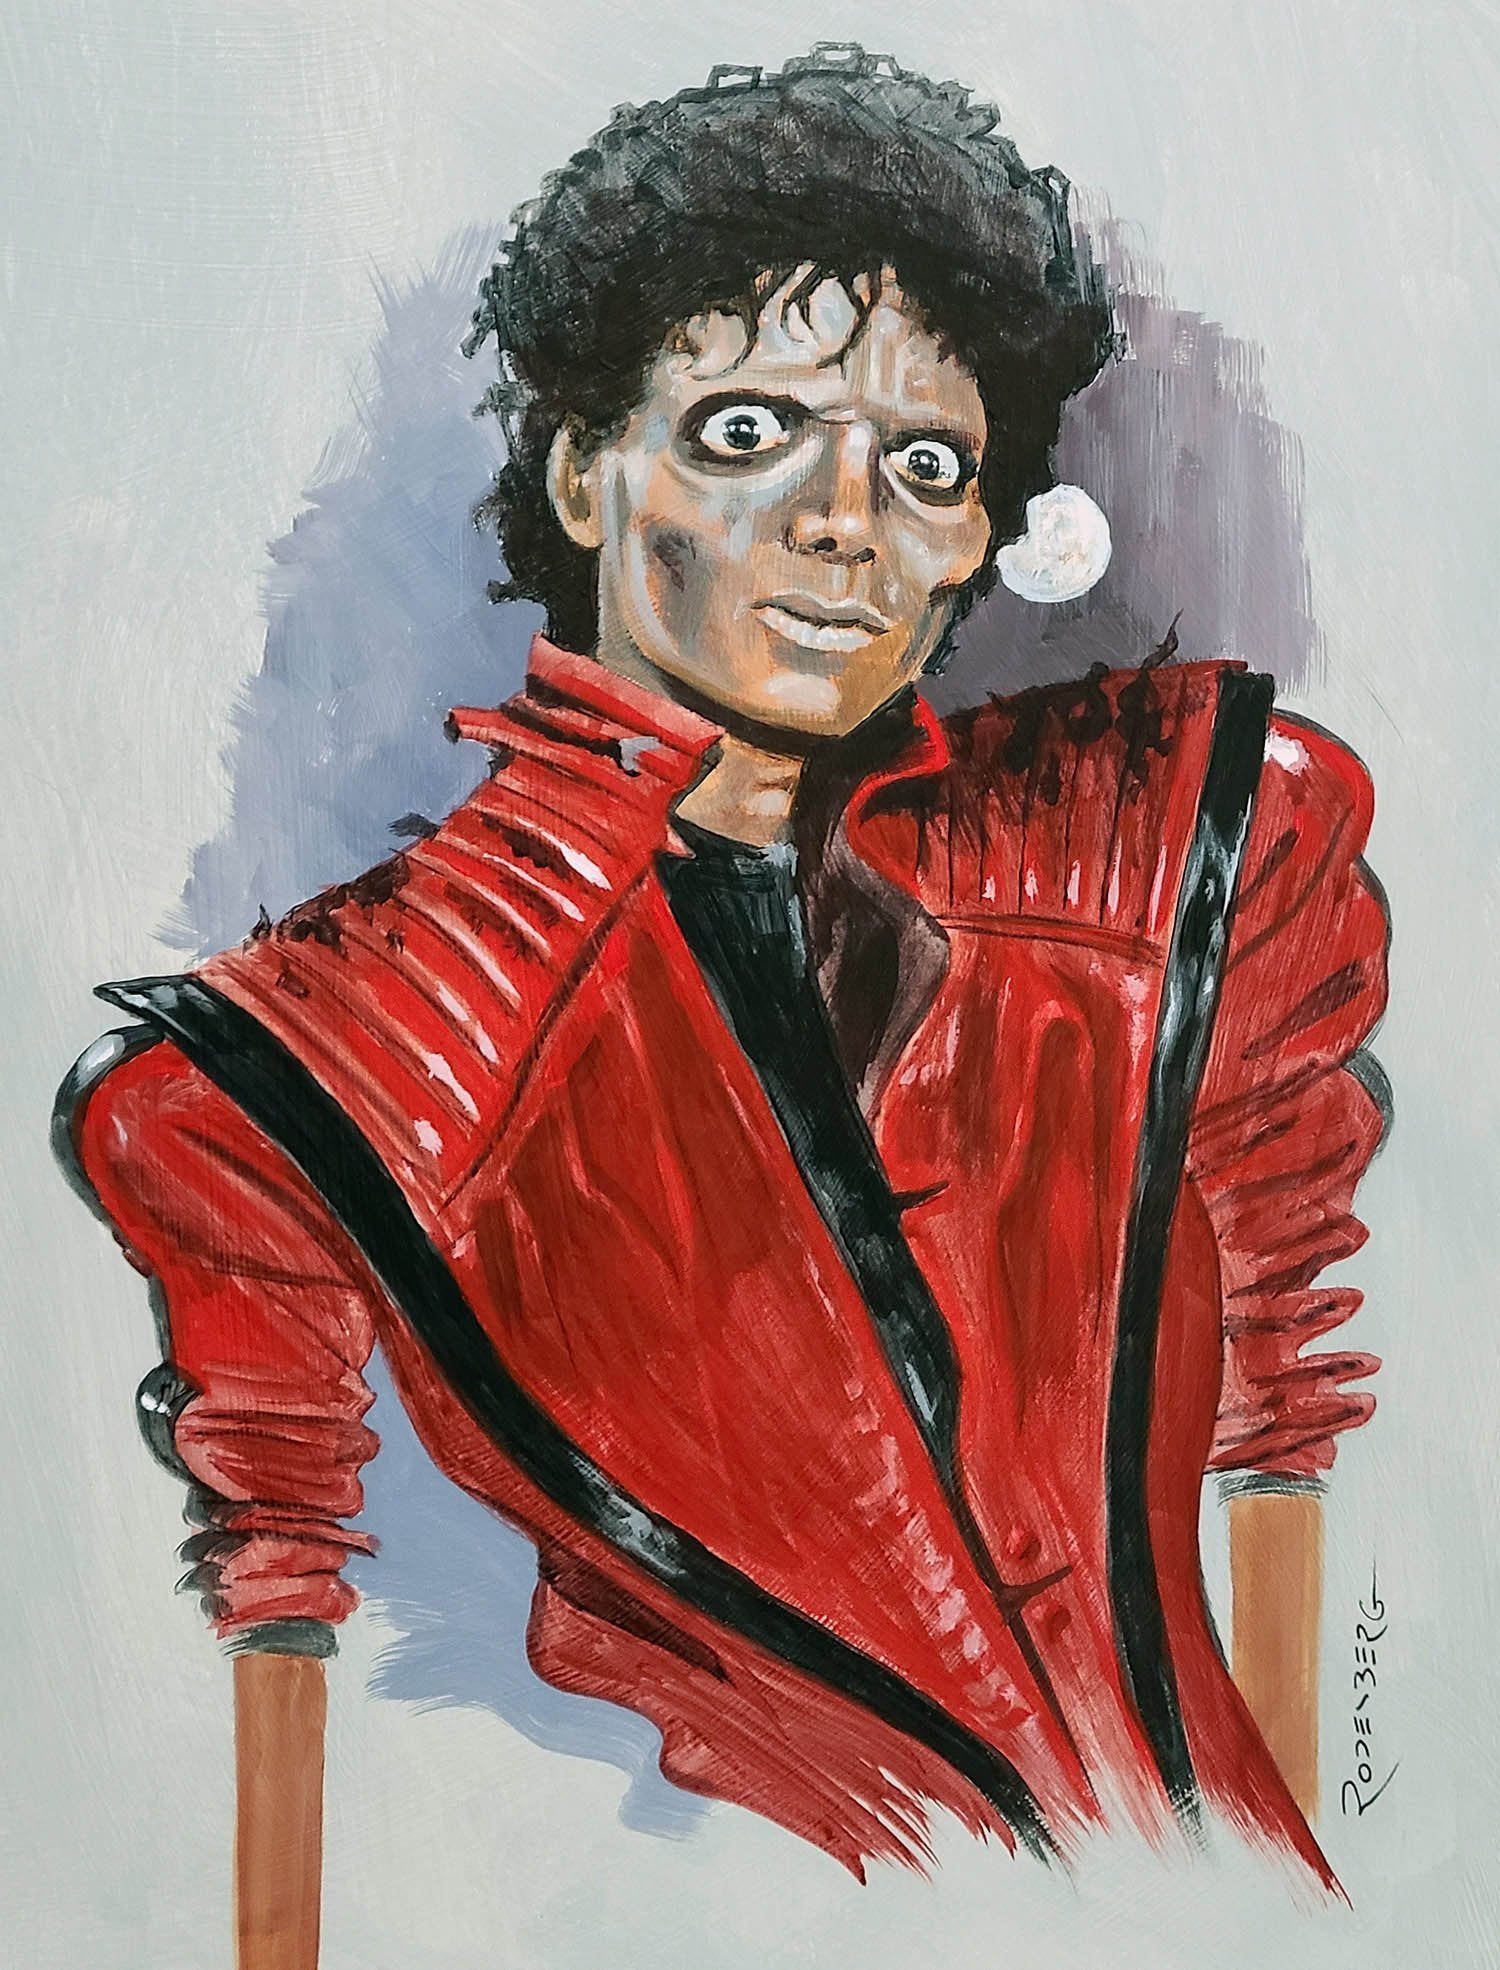  Michael Jackson portrait painting art by Jeff Rodenberg